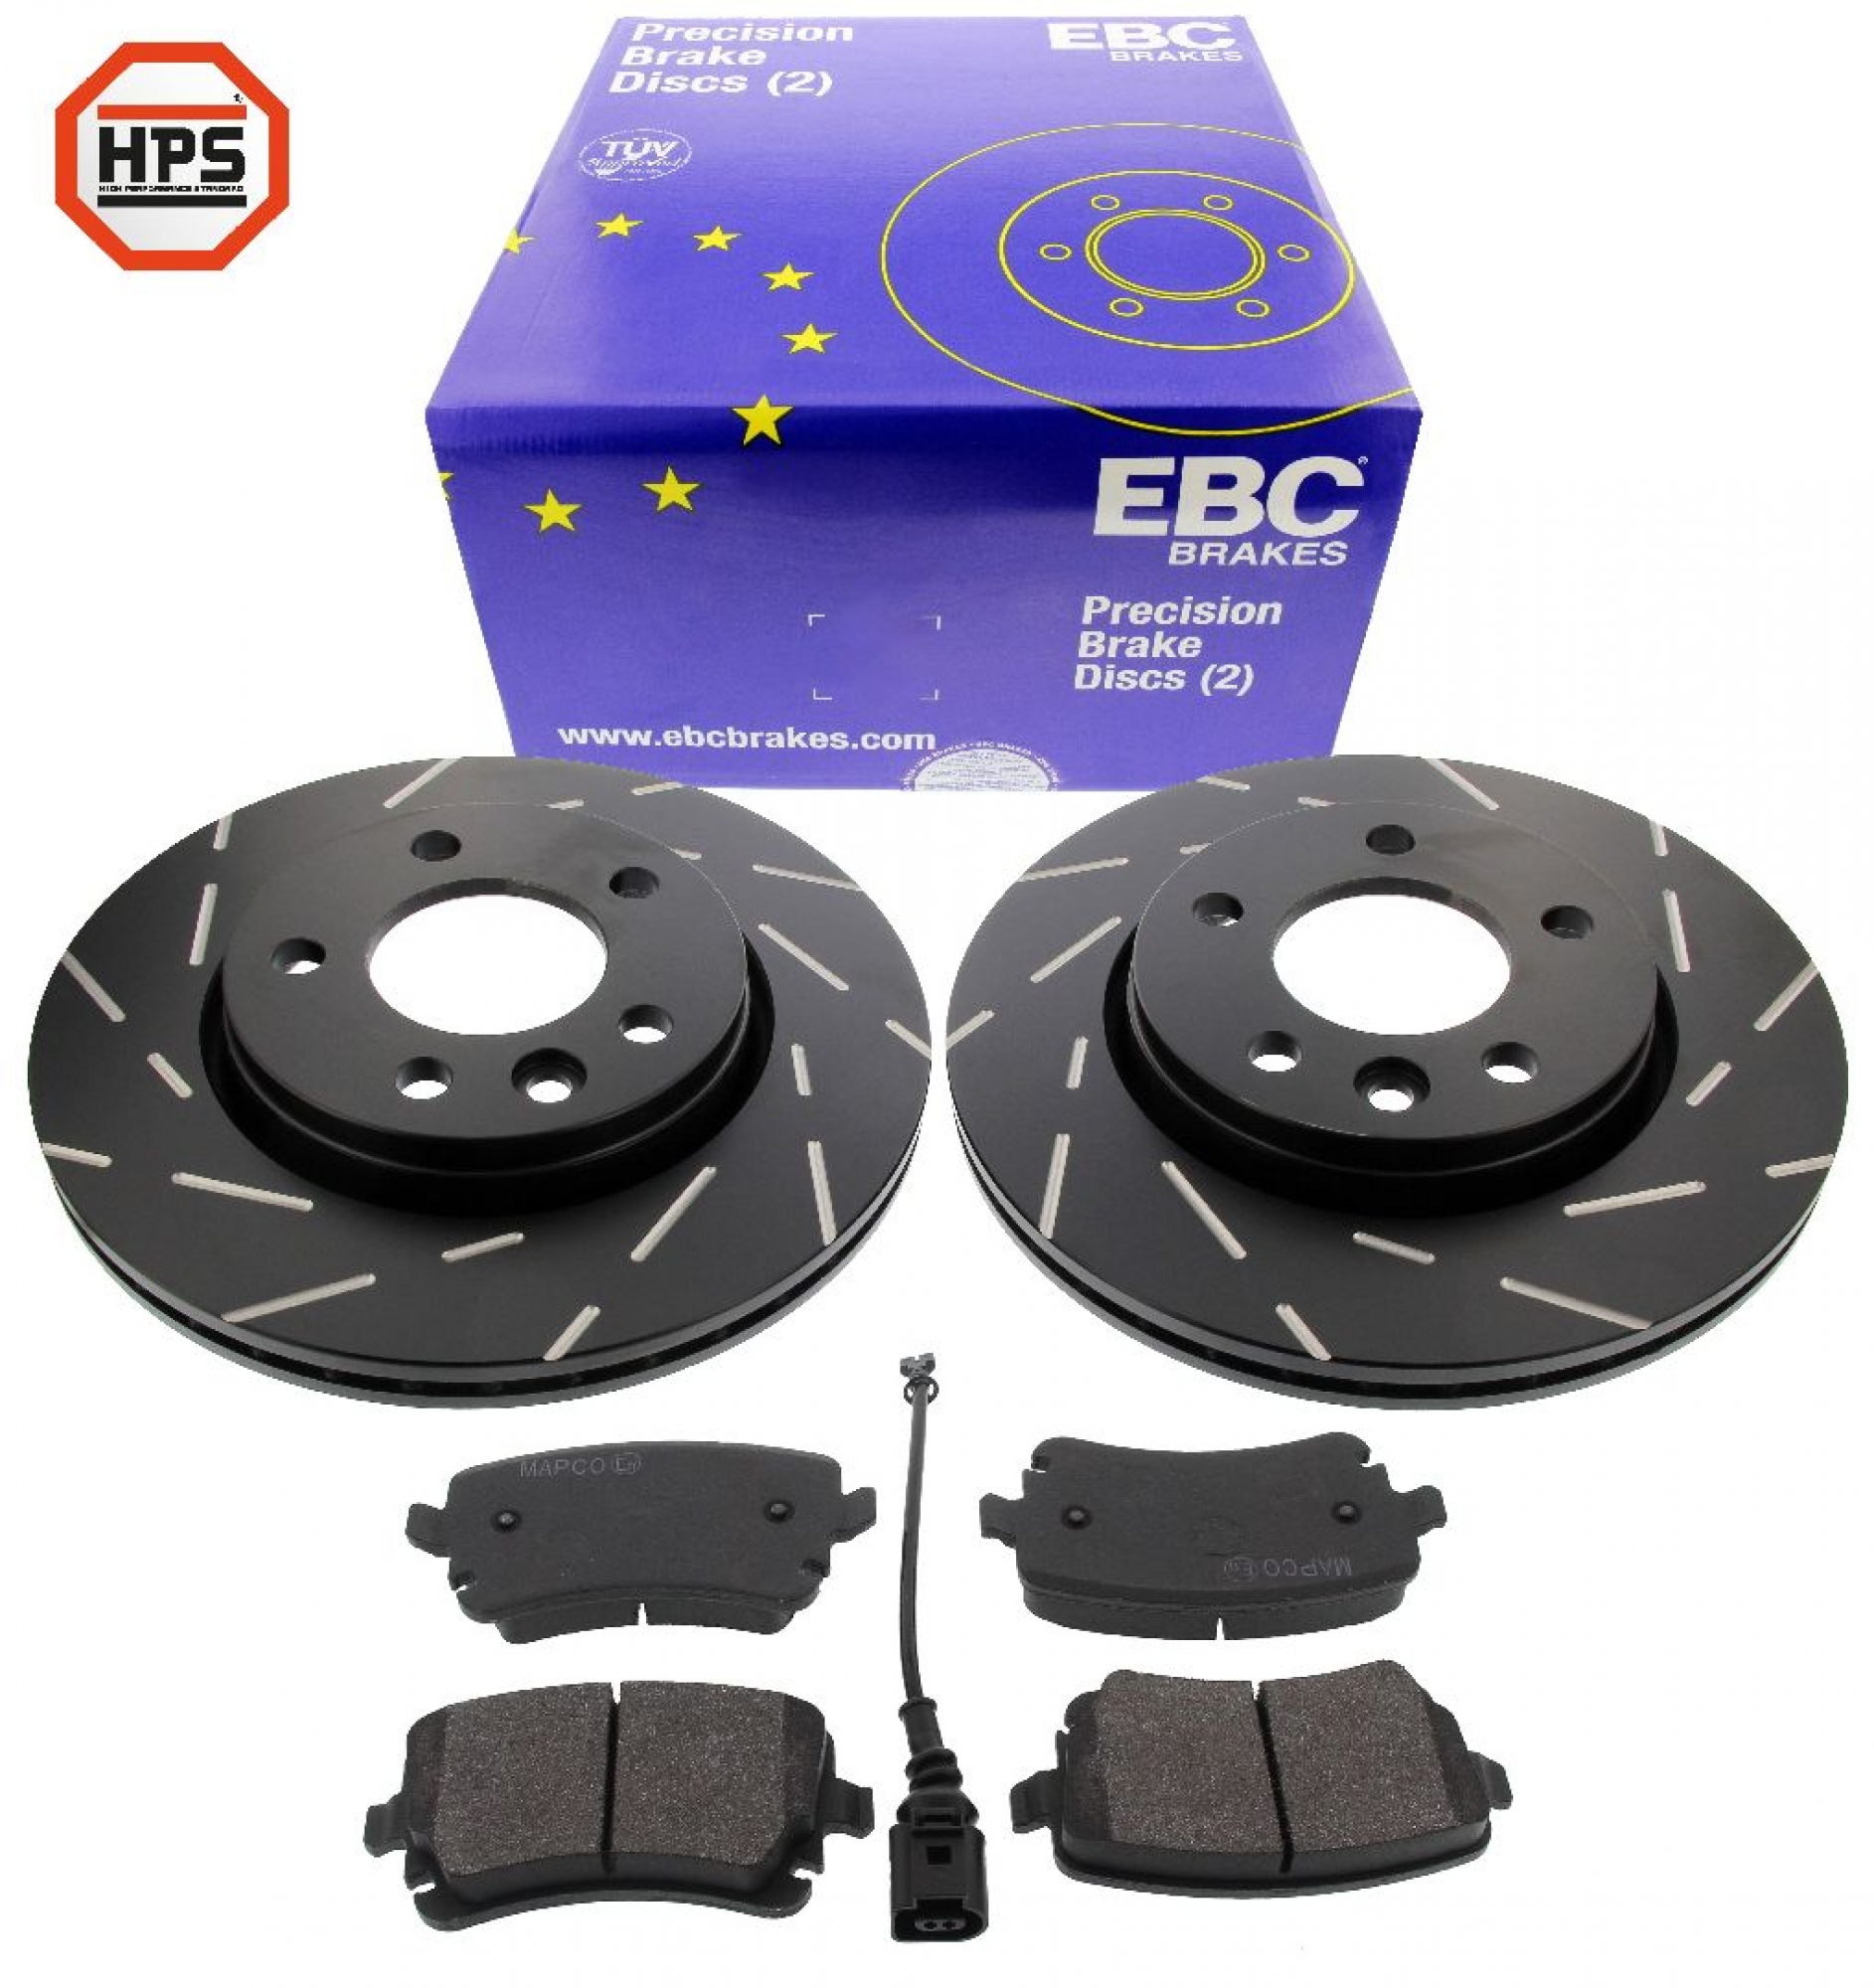 EBC-Bremsscheiben, Black Dash Disc (2-teilig), HA, VW Transporter